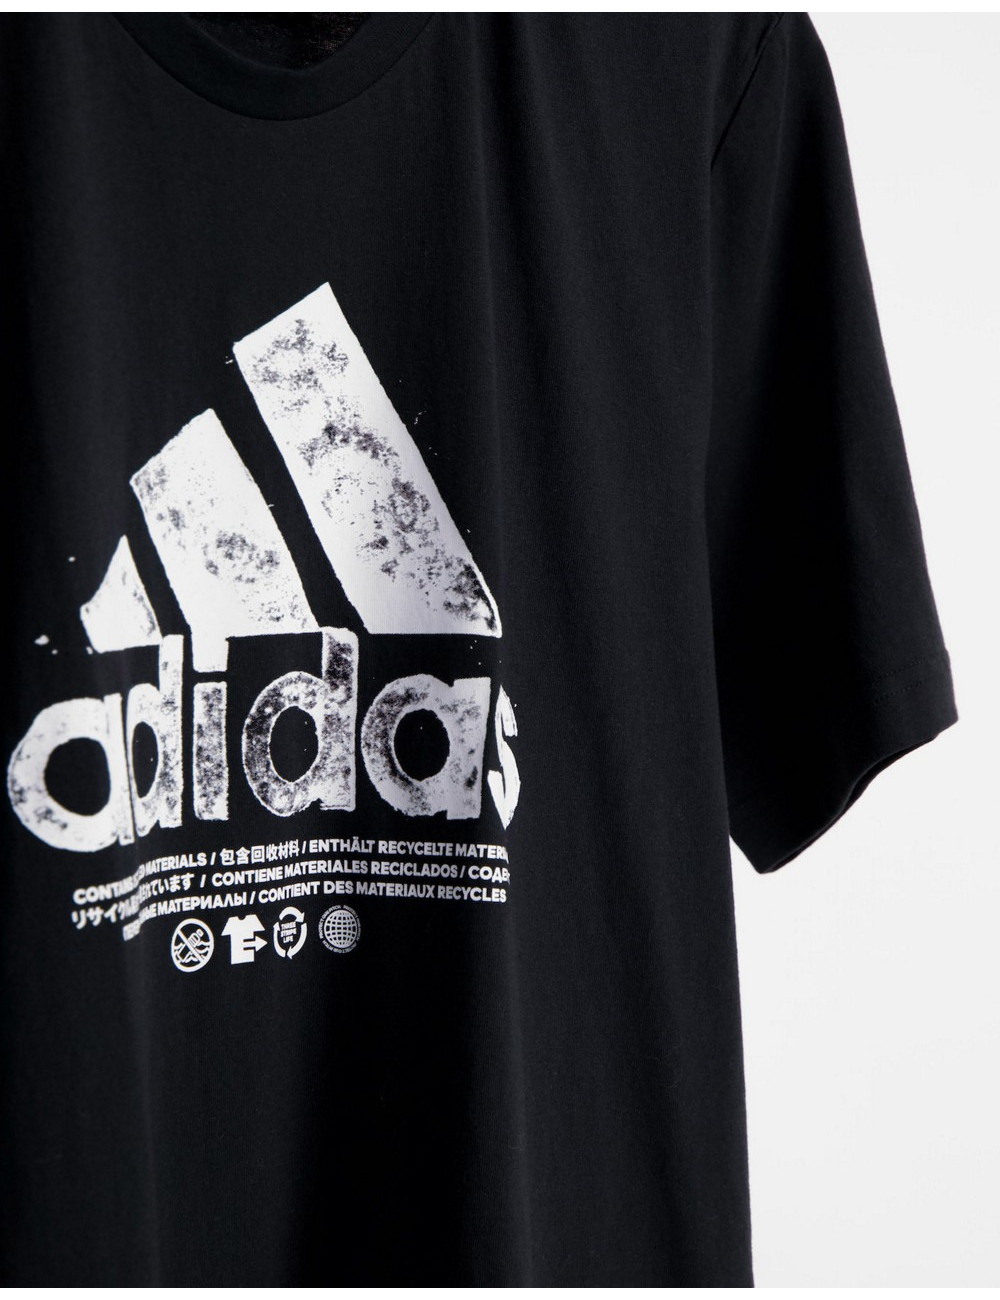 adidas print t-shirt in black